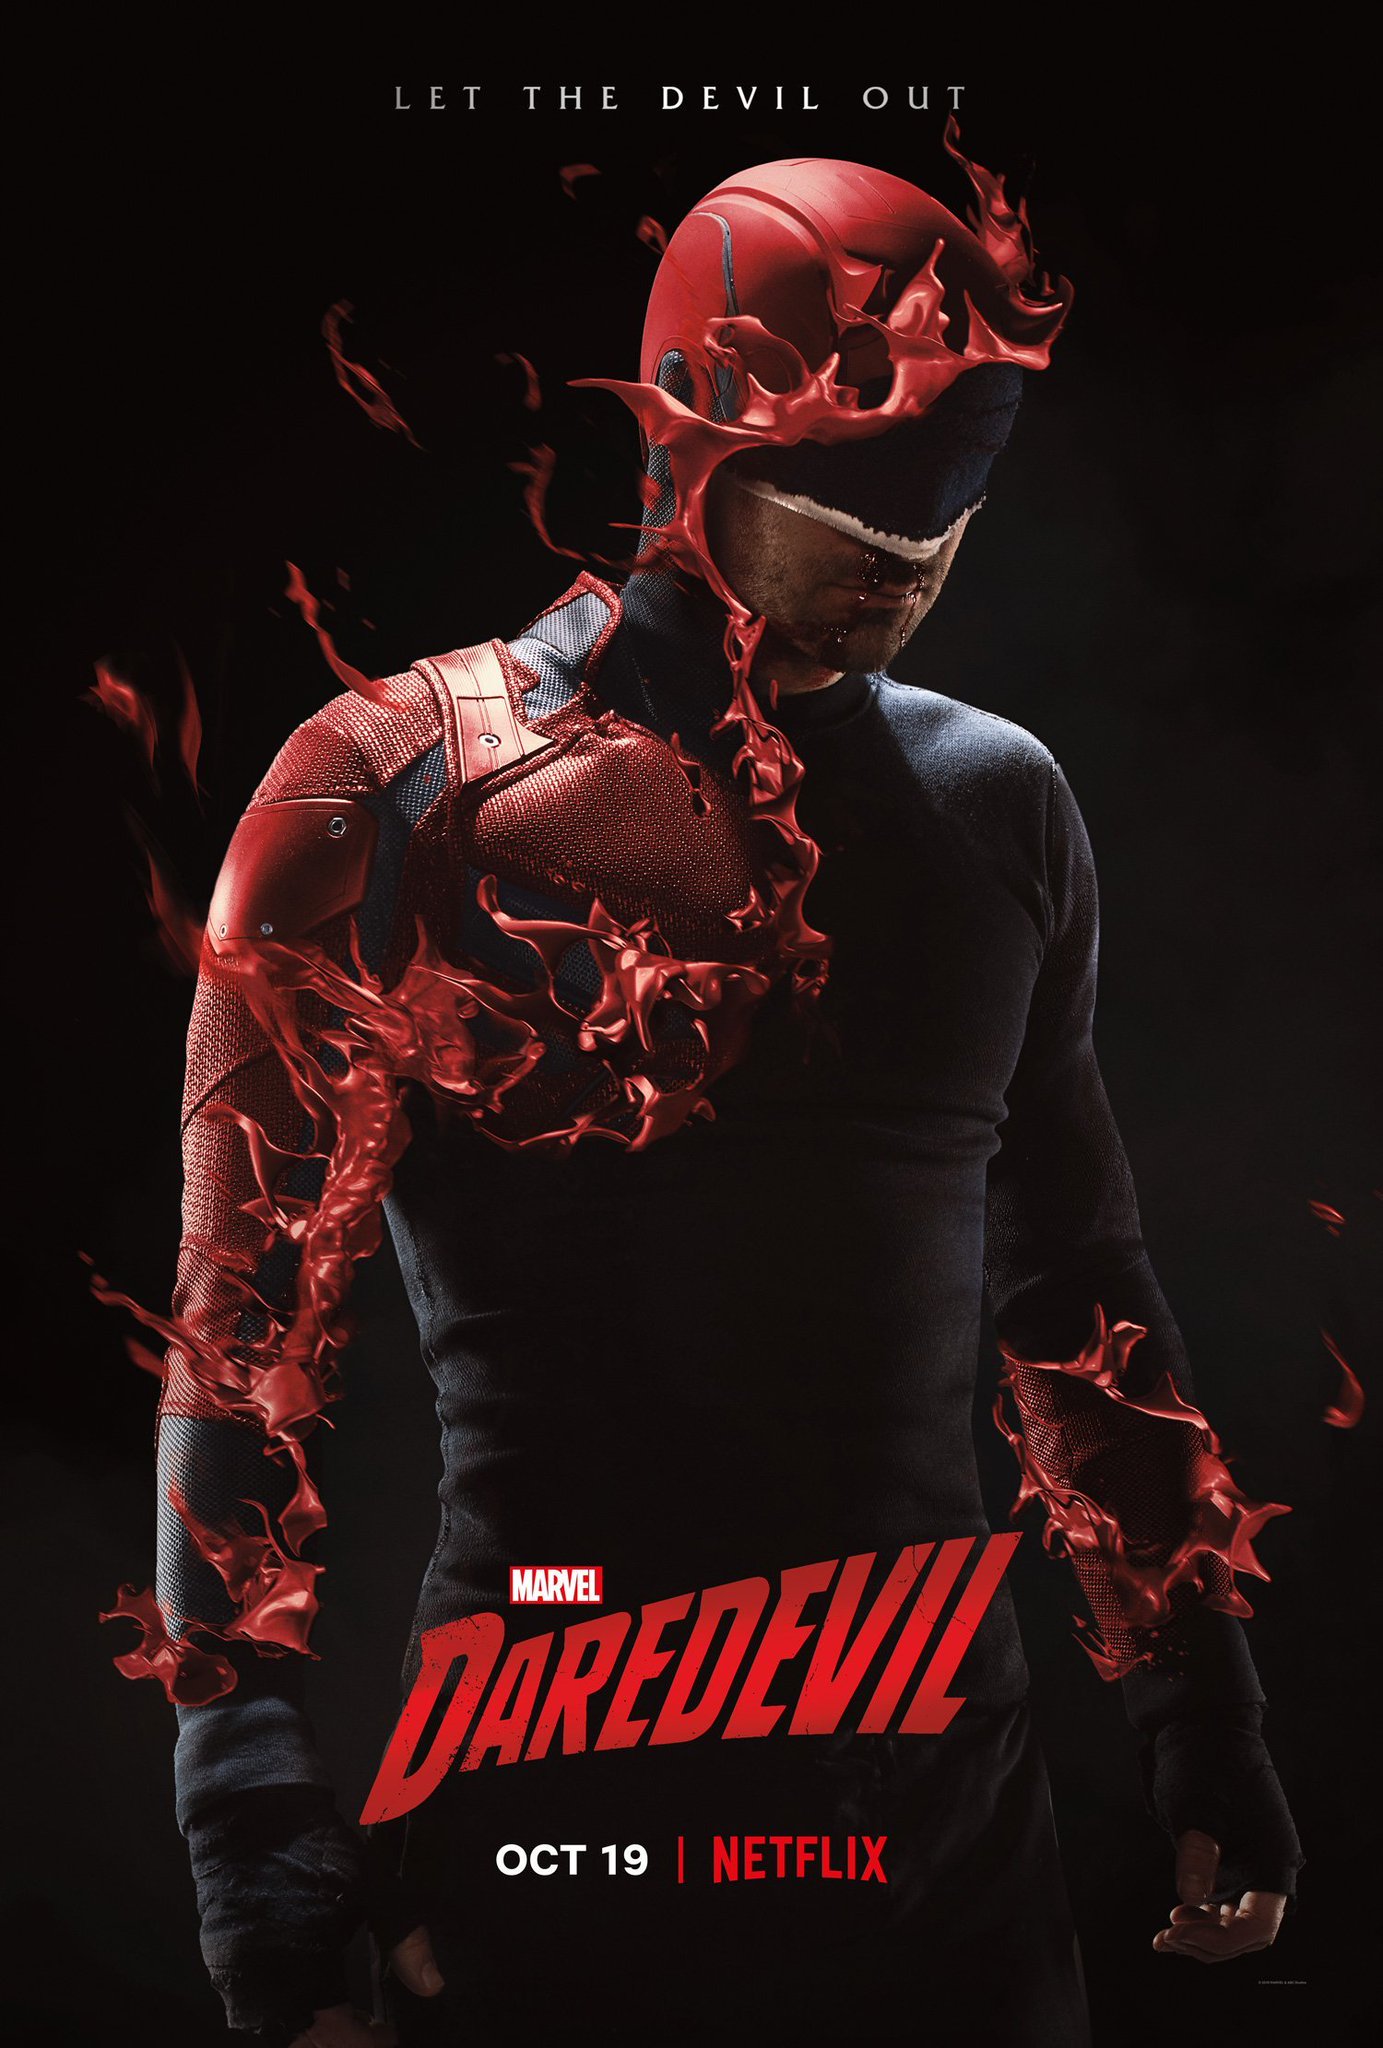 Image result for daredevil season 3 poster let the devil out